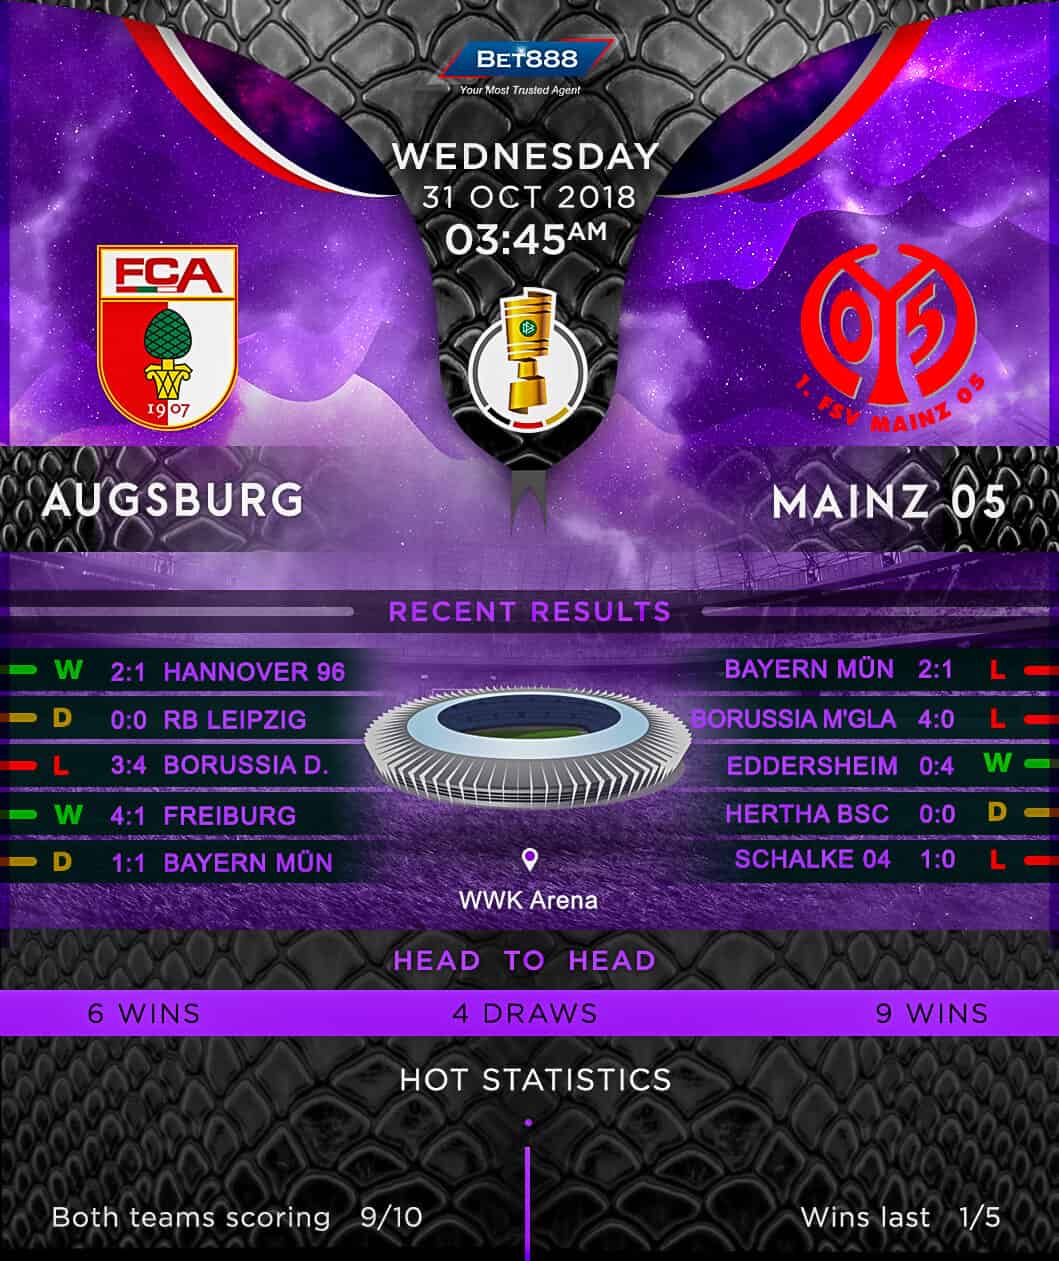 Augsburg vs Mainz 05 31/10/18